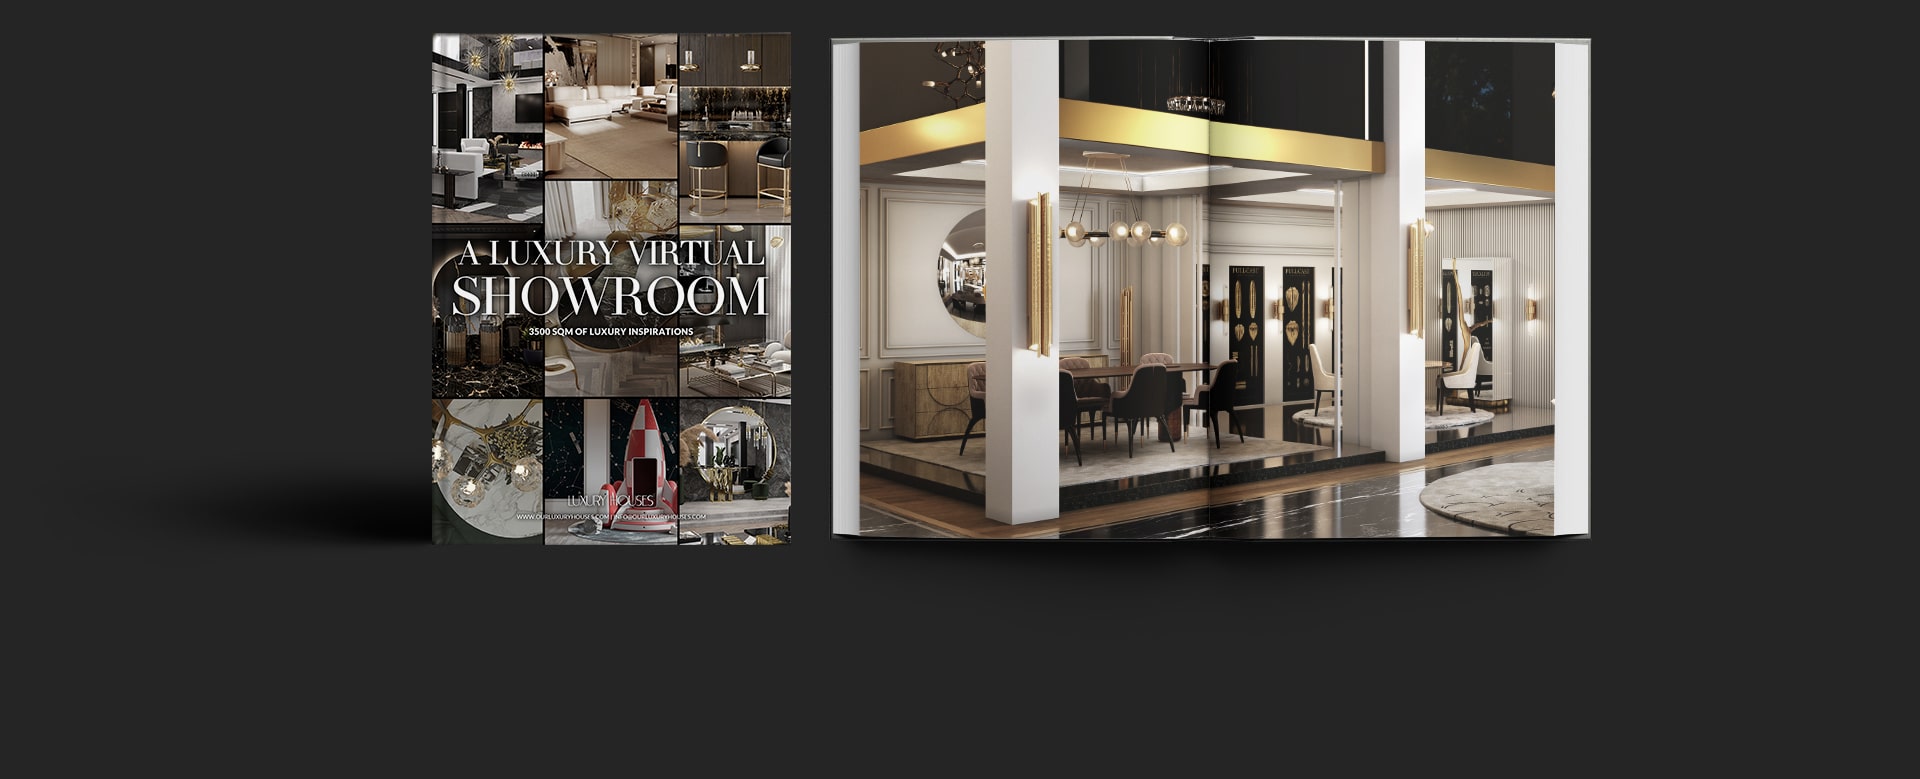 a virtual luxury showroom